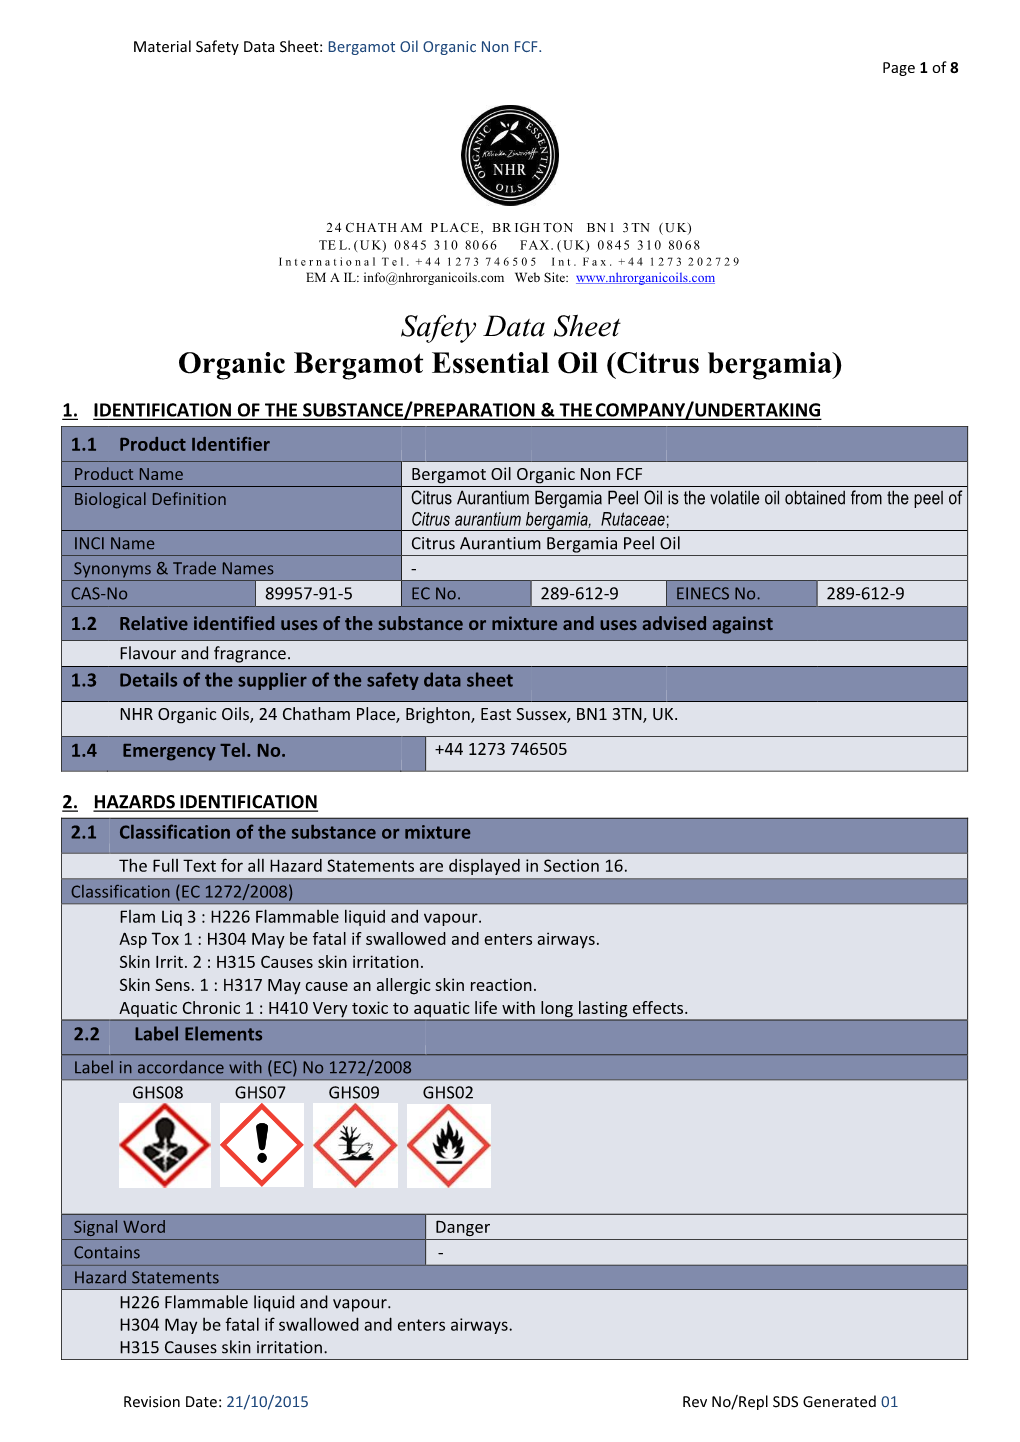 Safety Data Sheet Organic Bergamot Essential Oil (Citrus Bergamia)